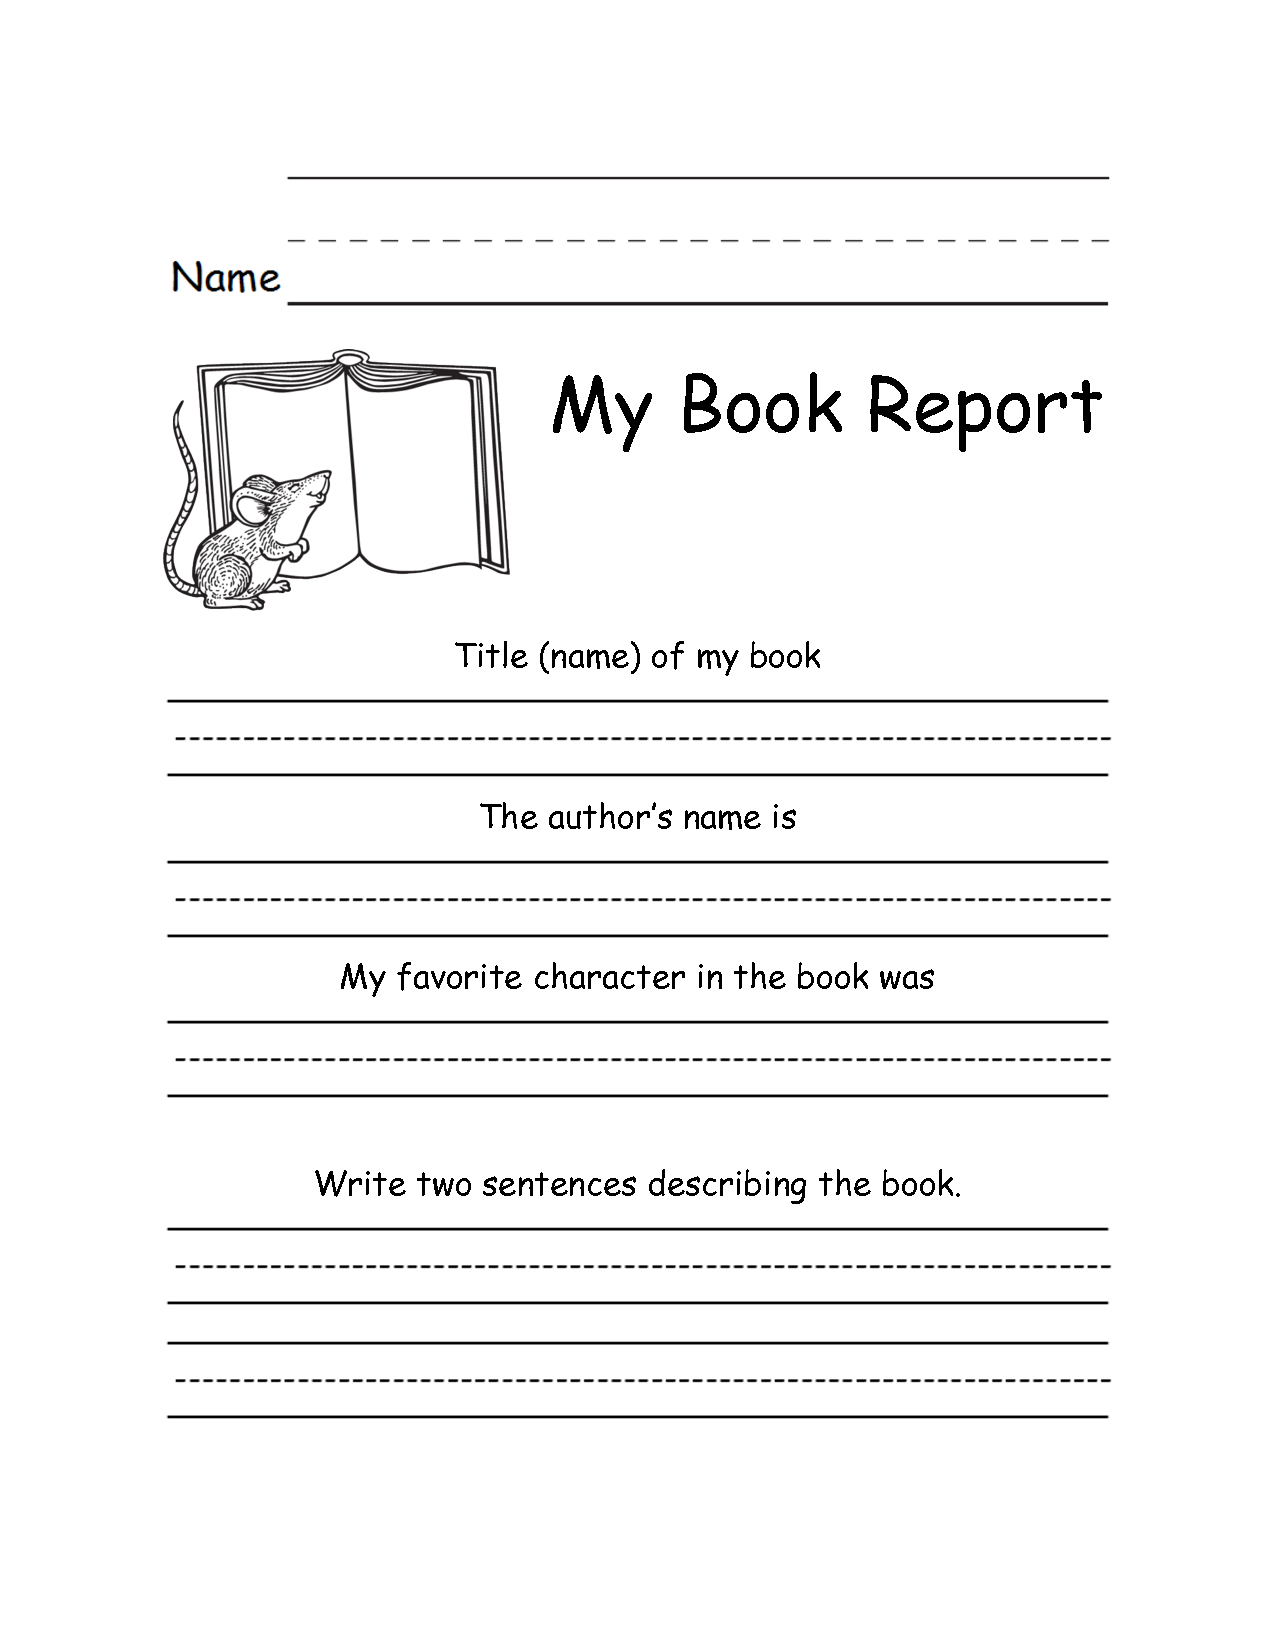 Primary school book report template